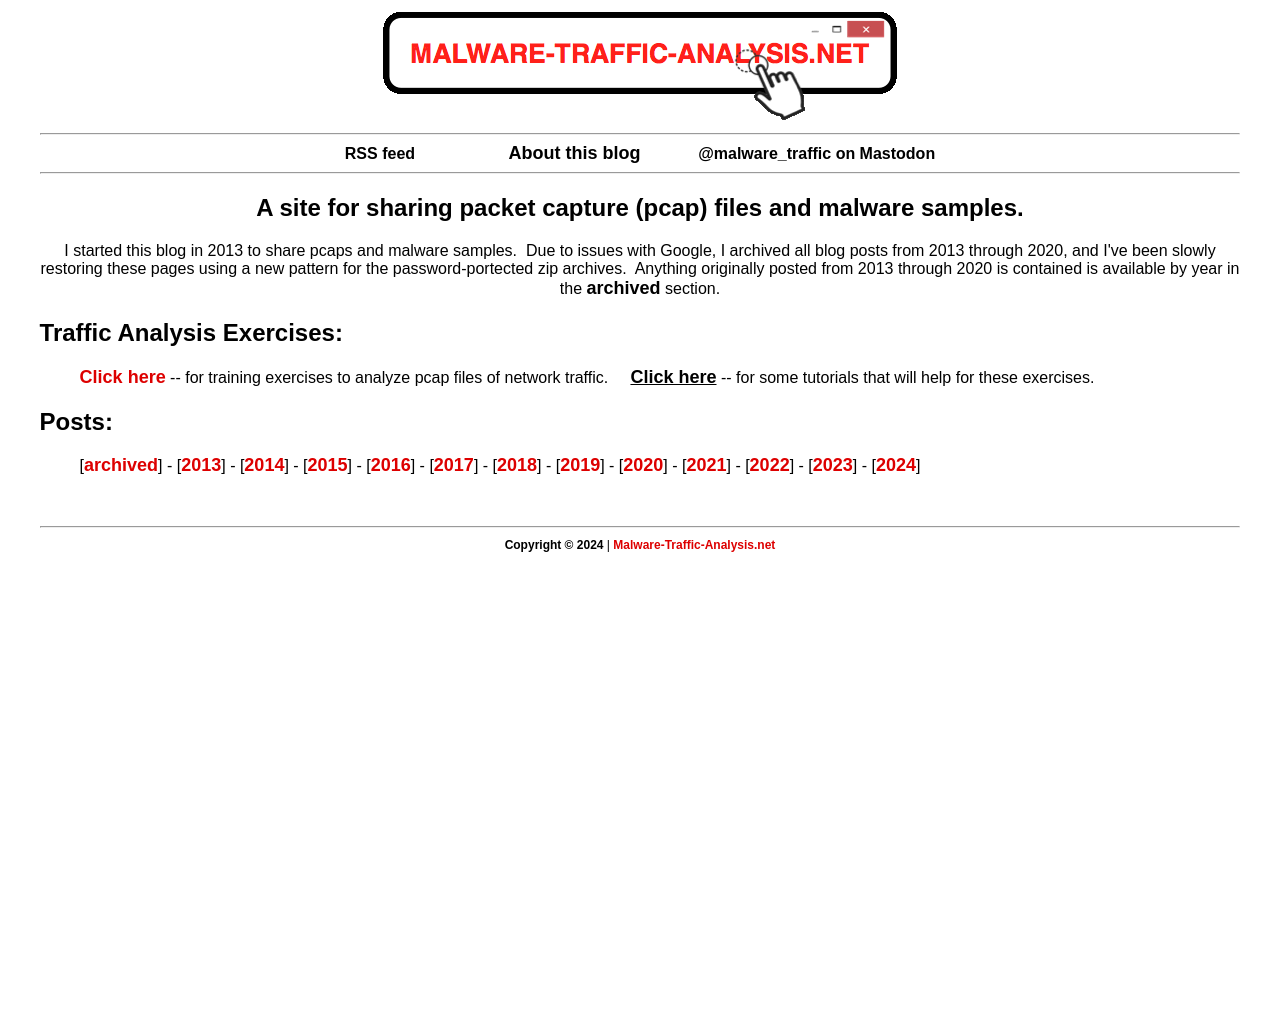 malware-traffic-analysis.net